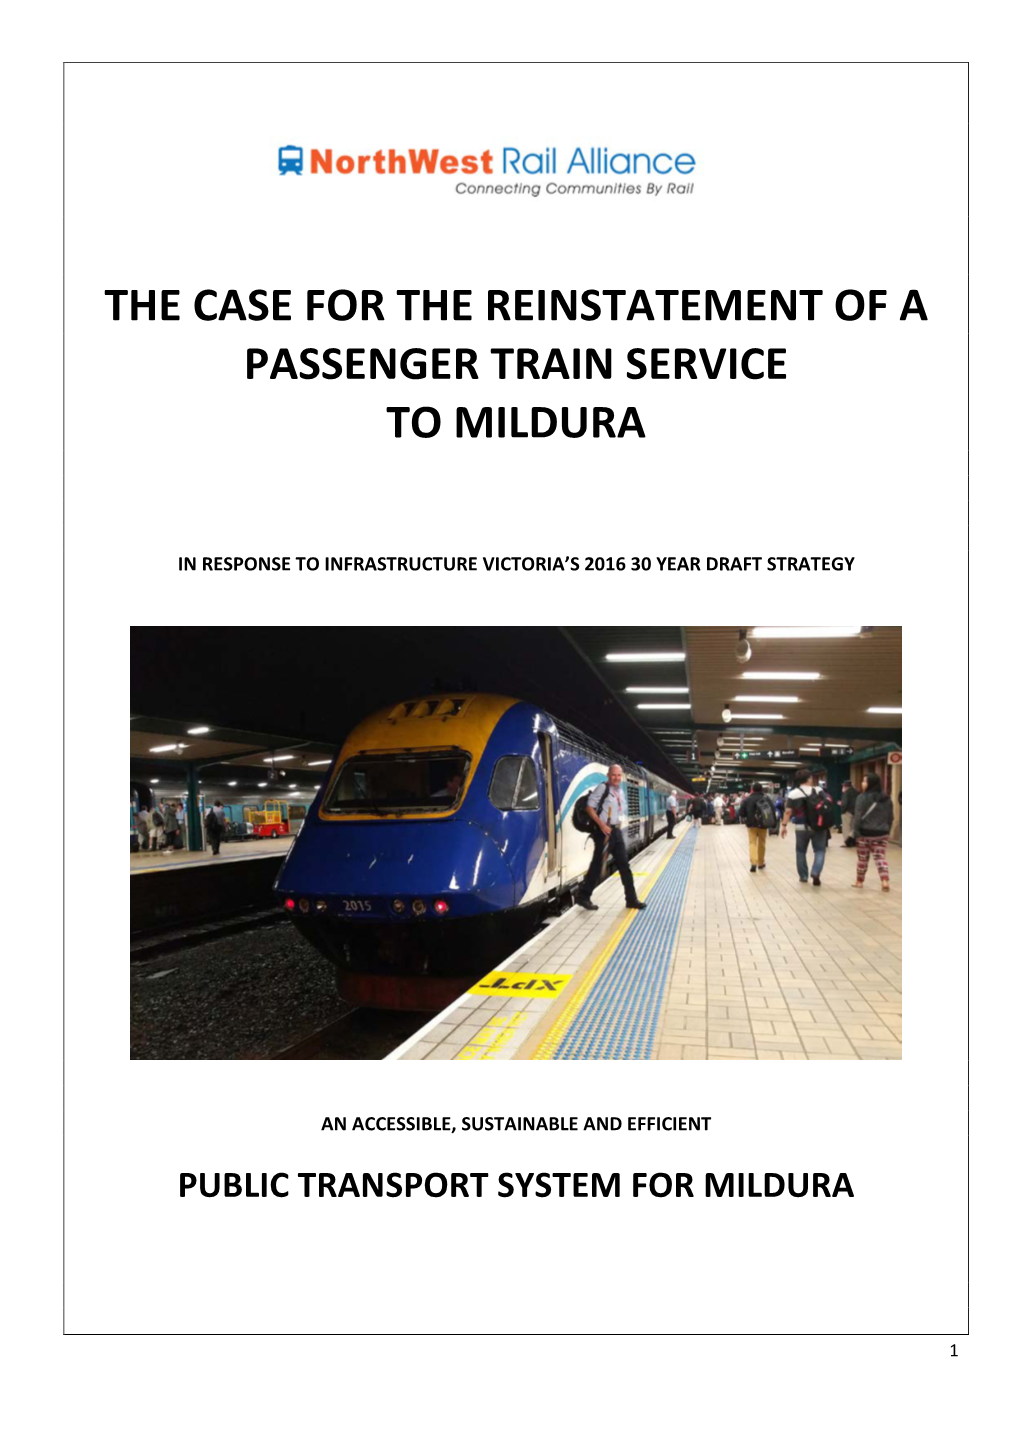 The Case for the Reinstatement of a Passenger Train Service to Mildura